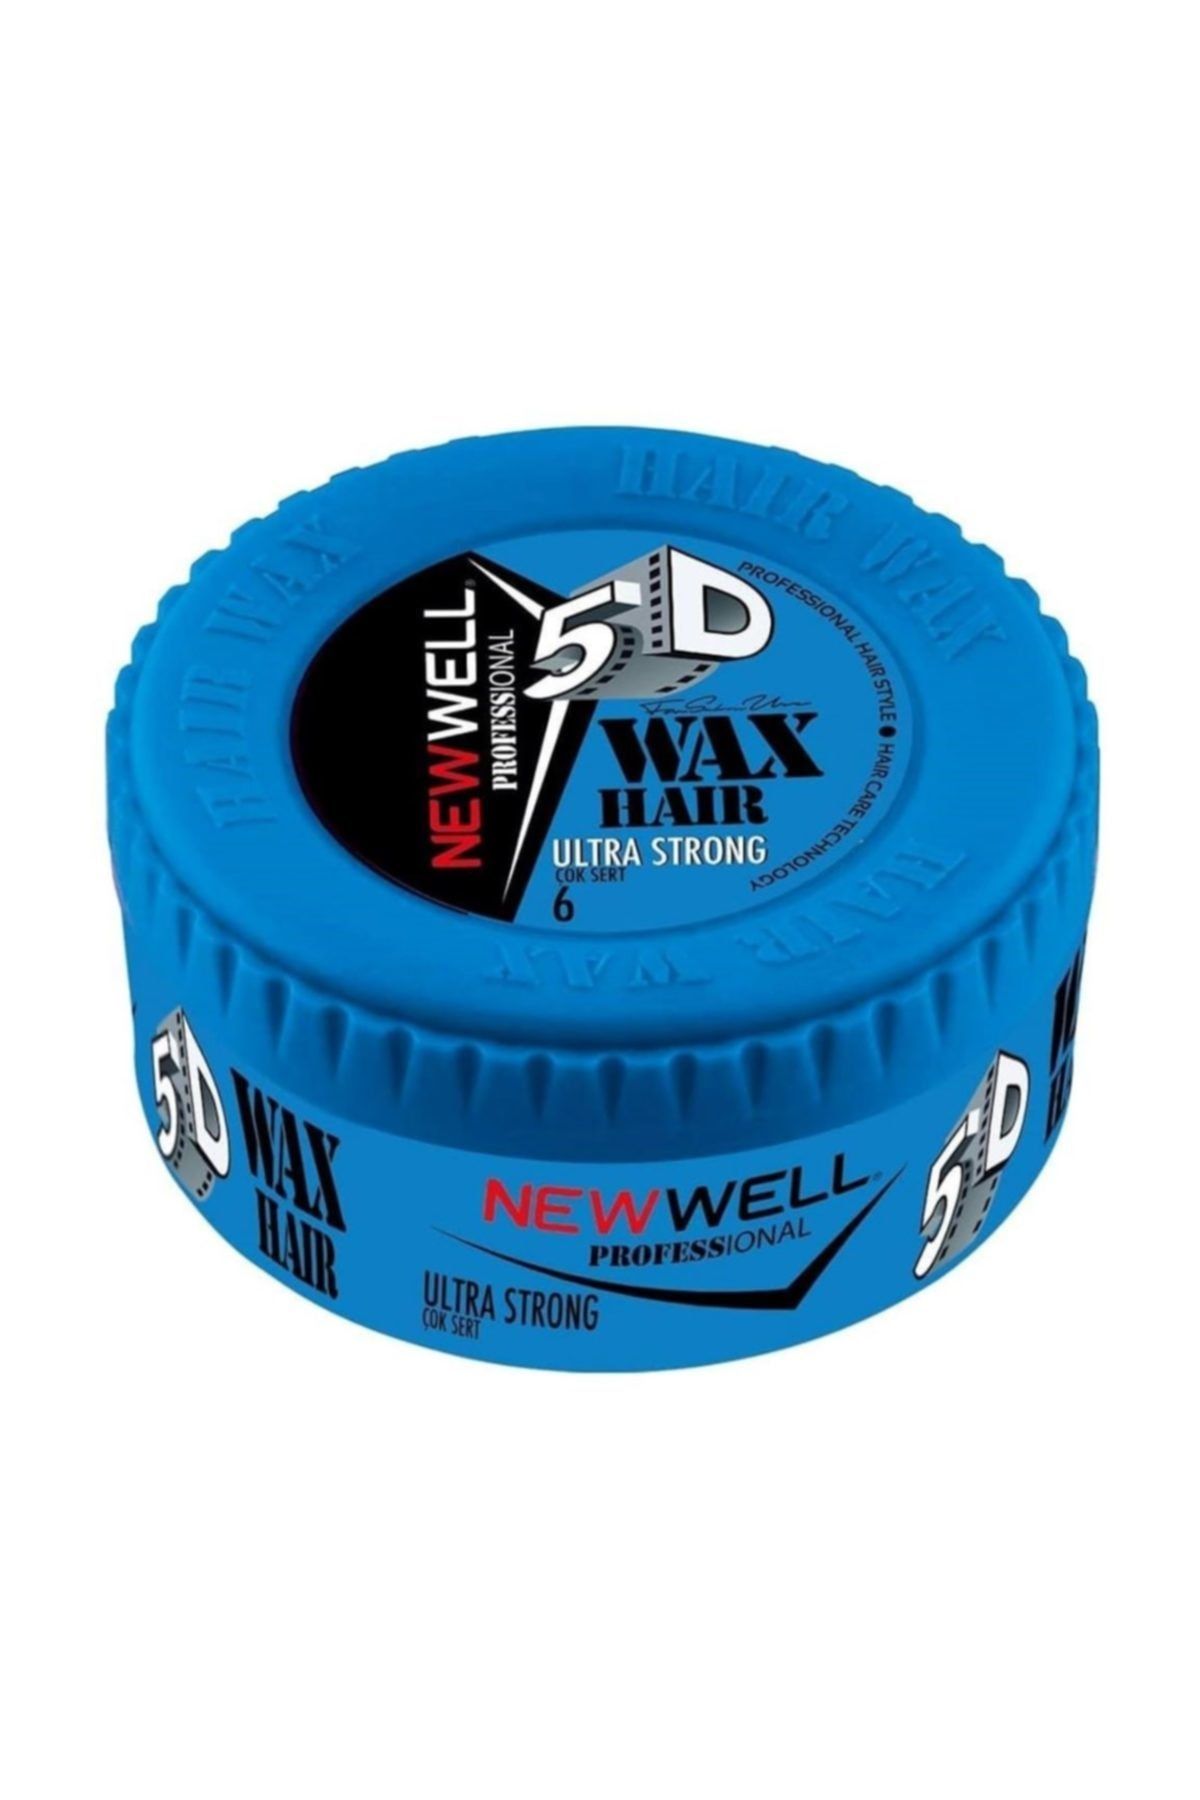 New Well Professional 5 D Wax Hair Ultra Strong 150 ml